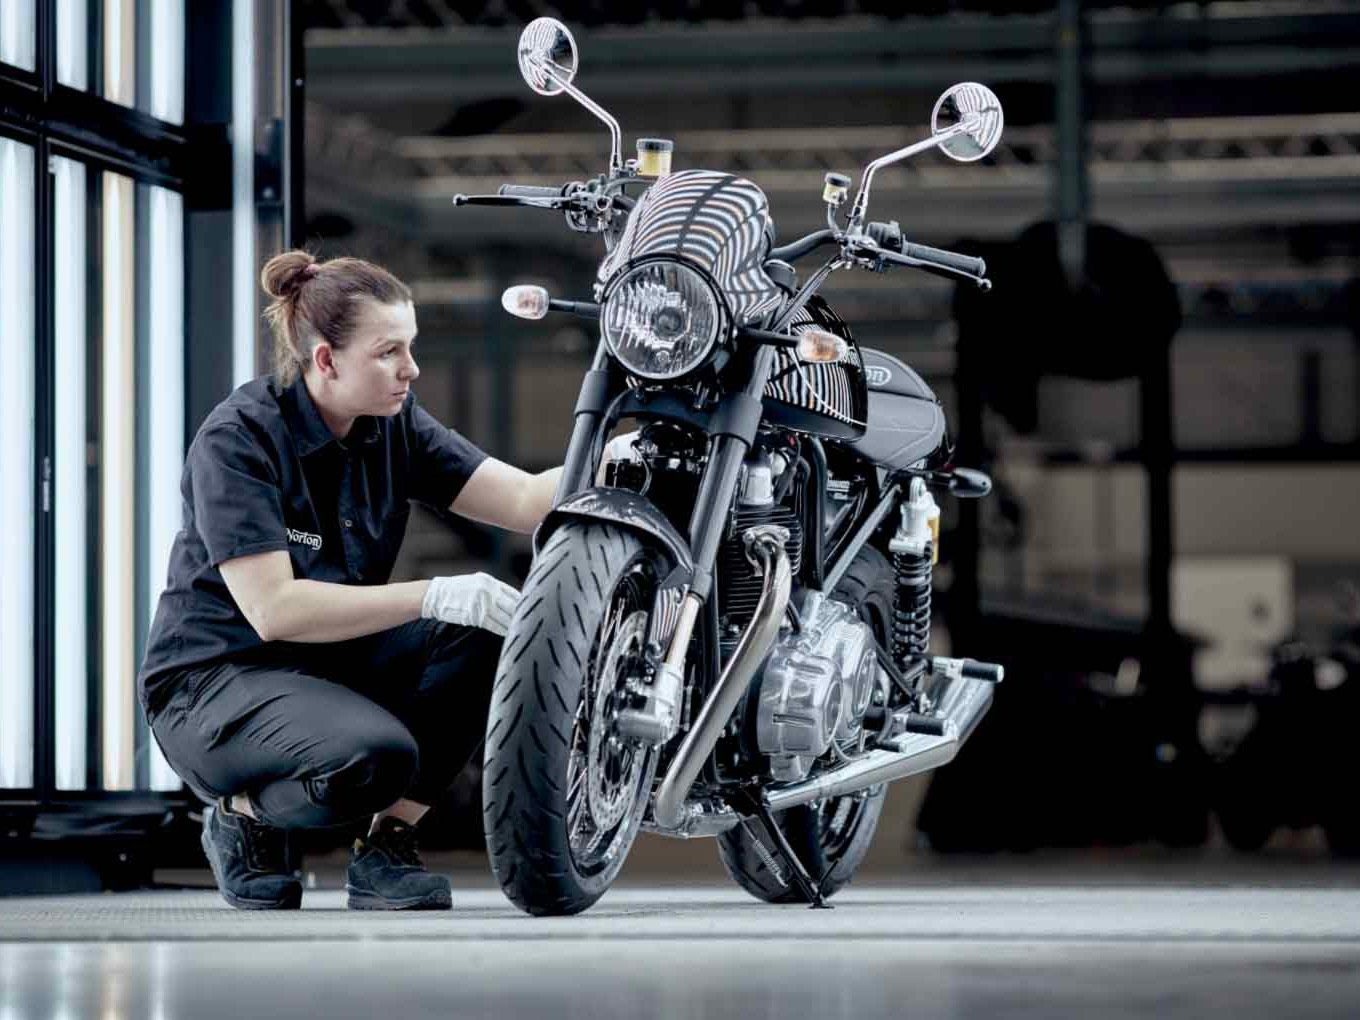 TVS-owned Norton Motorcycles Reveals the Norton Commando 961 bike